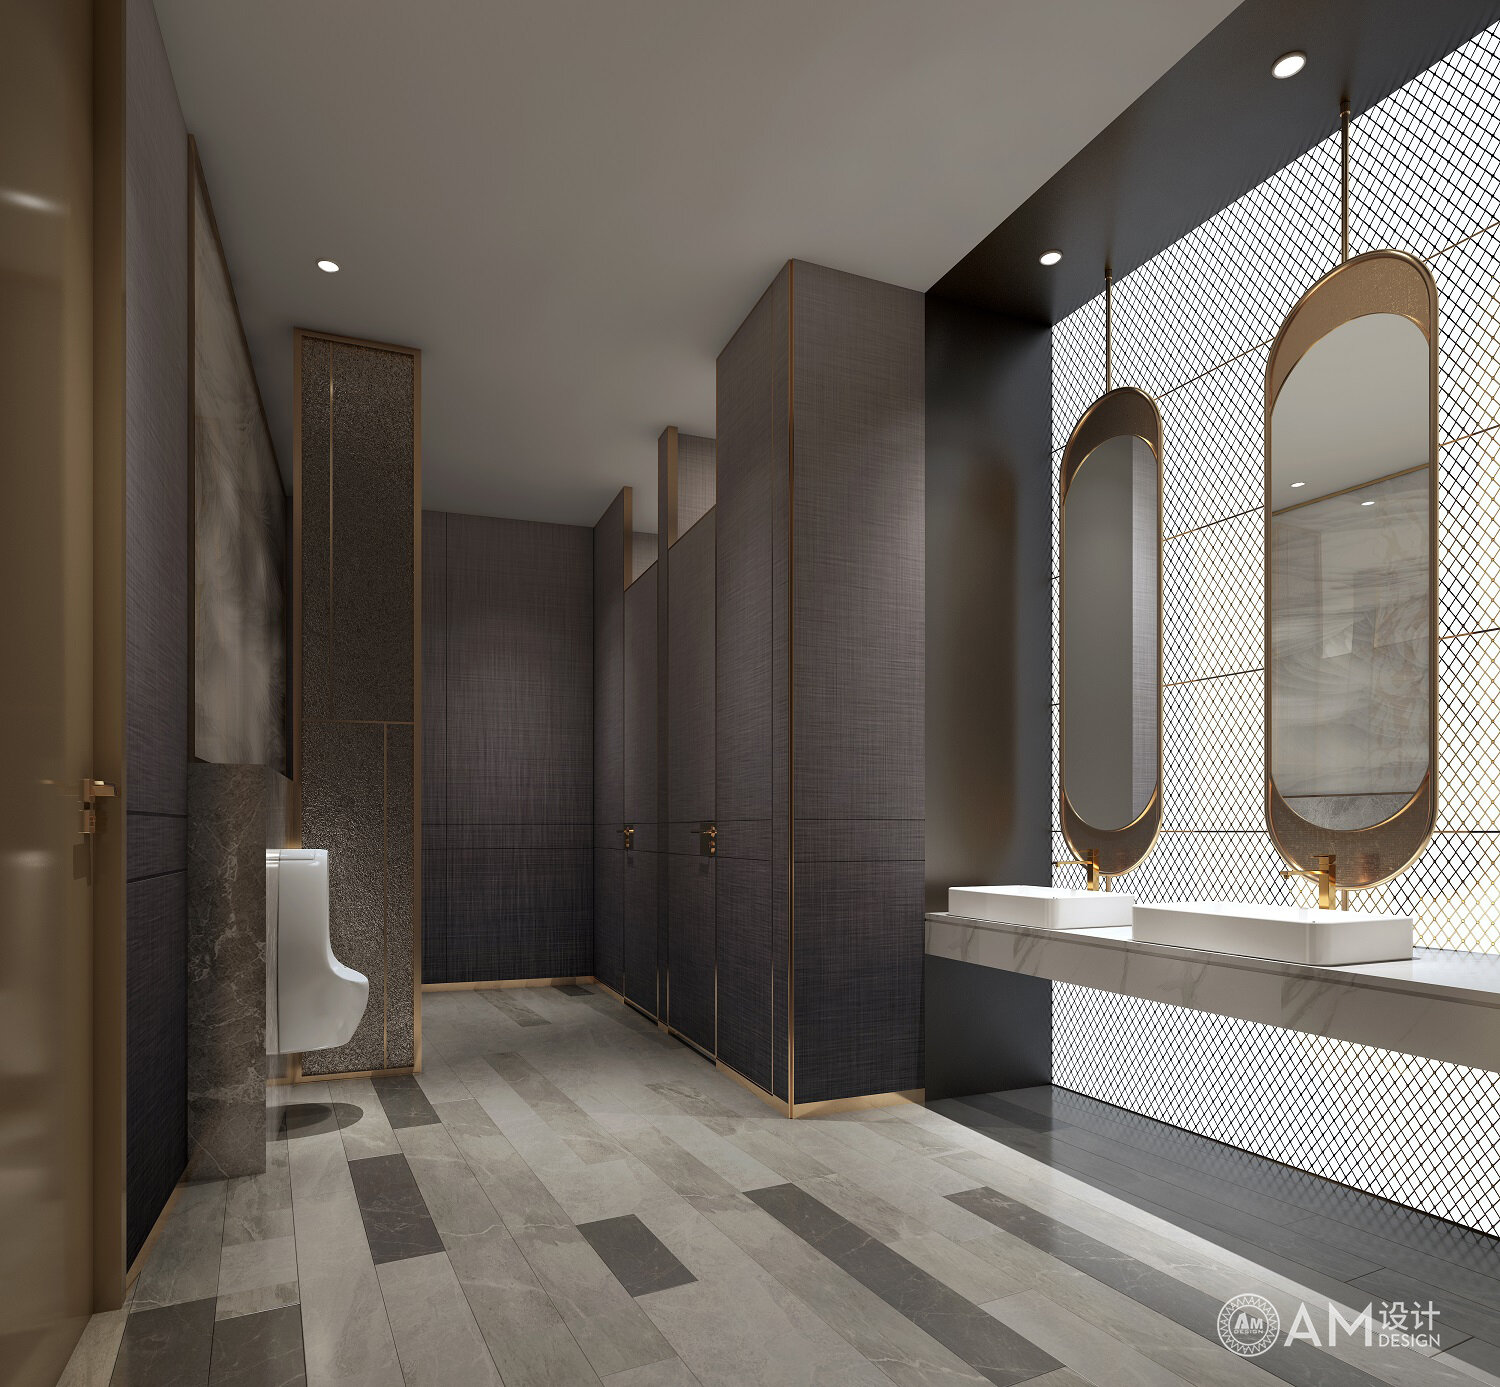 AM | Toilet design of Cangzhou Teppanyaki cafeteria